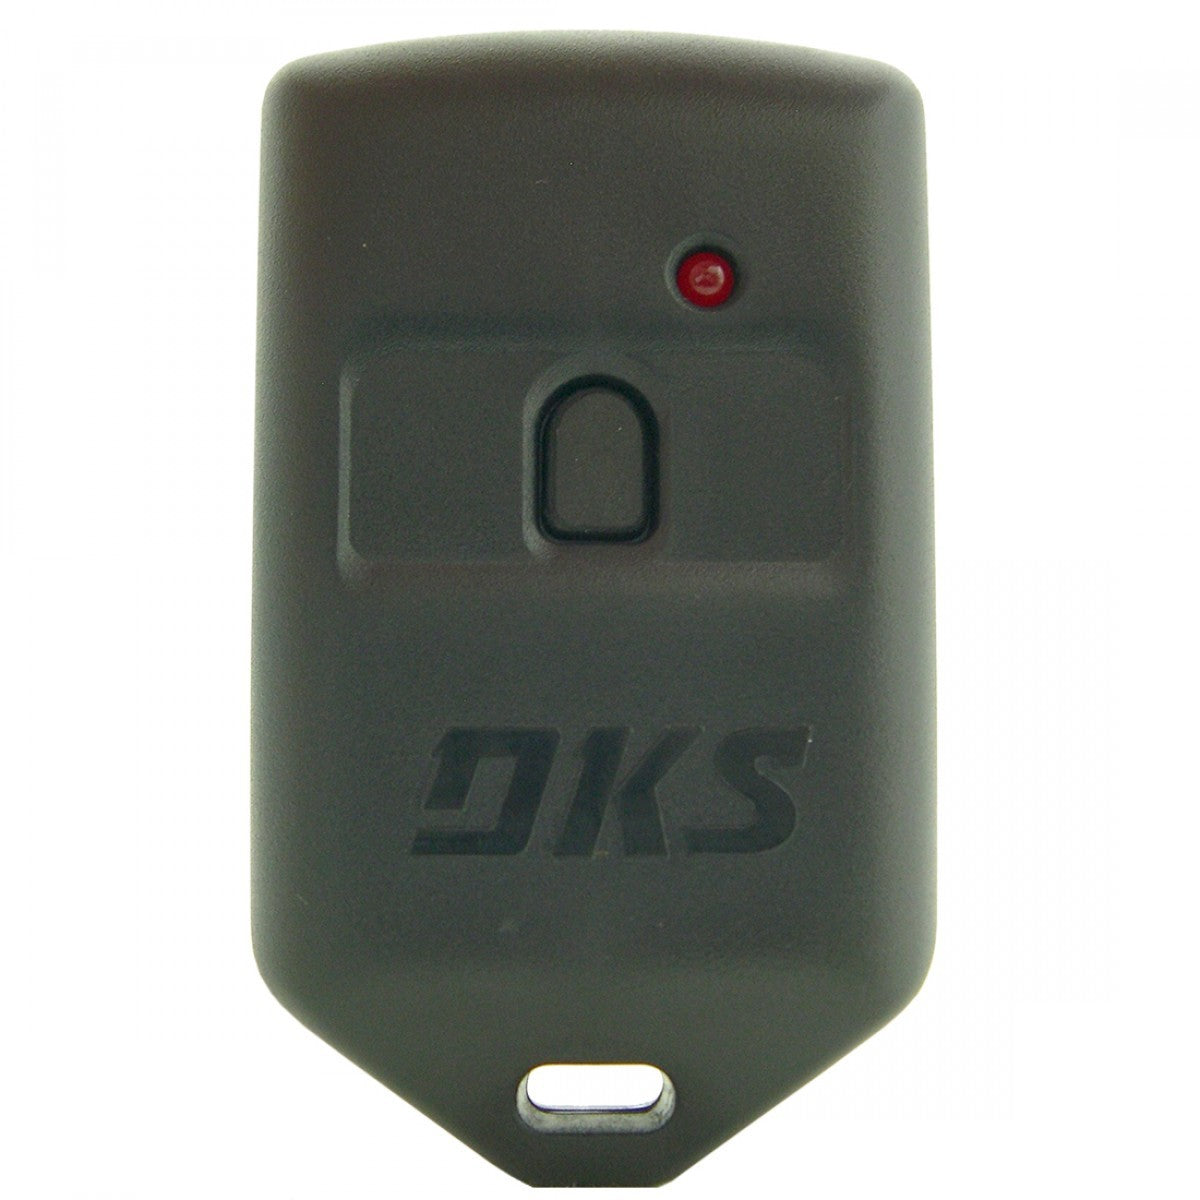 Doorking DKS MicroPLUS Remotes